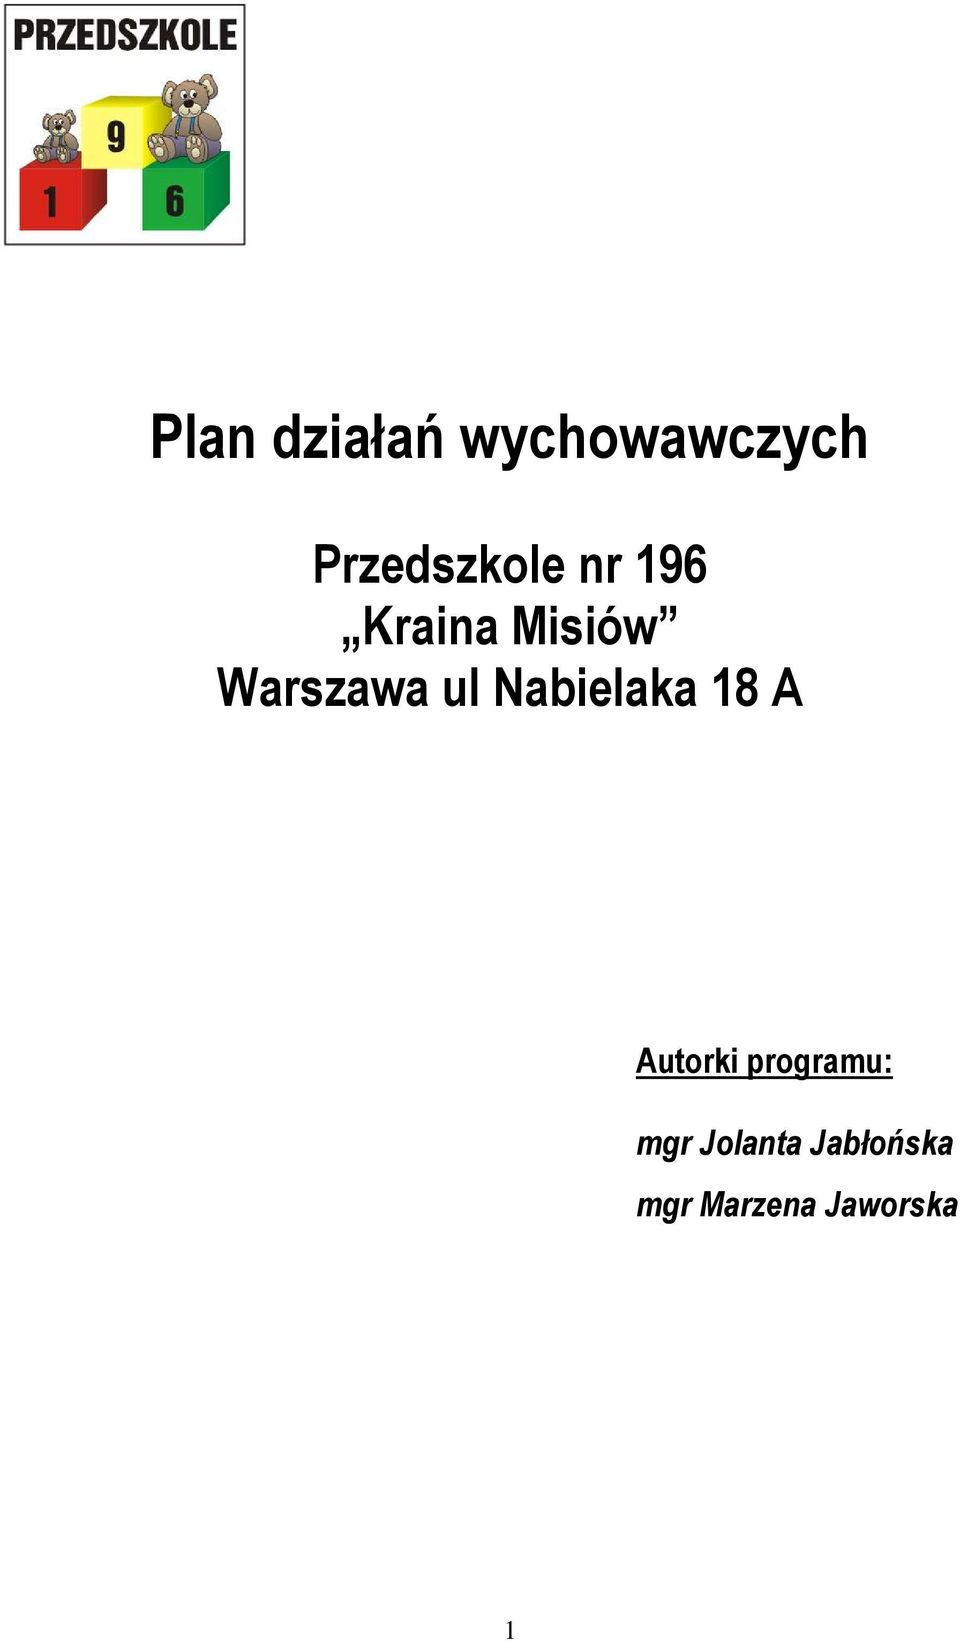 Warszawa ul Nabielaka 18 A Autorki